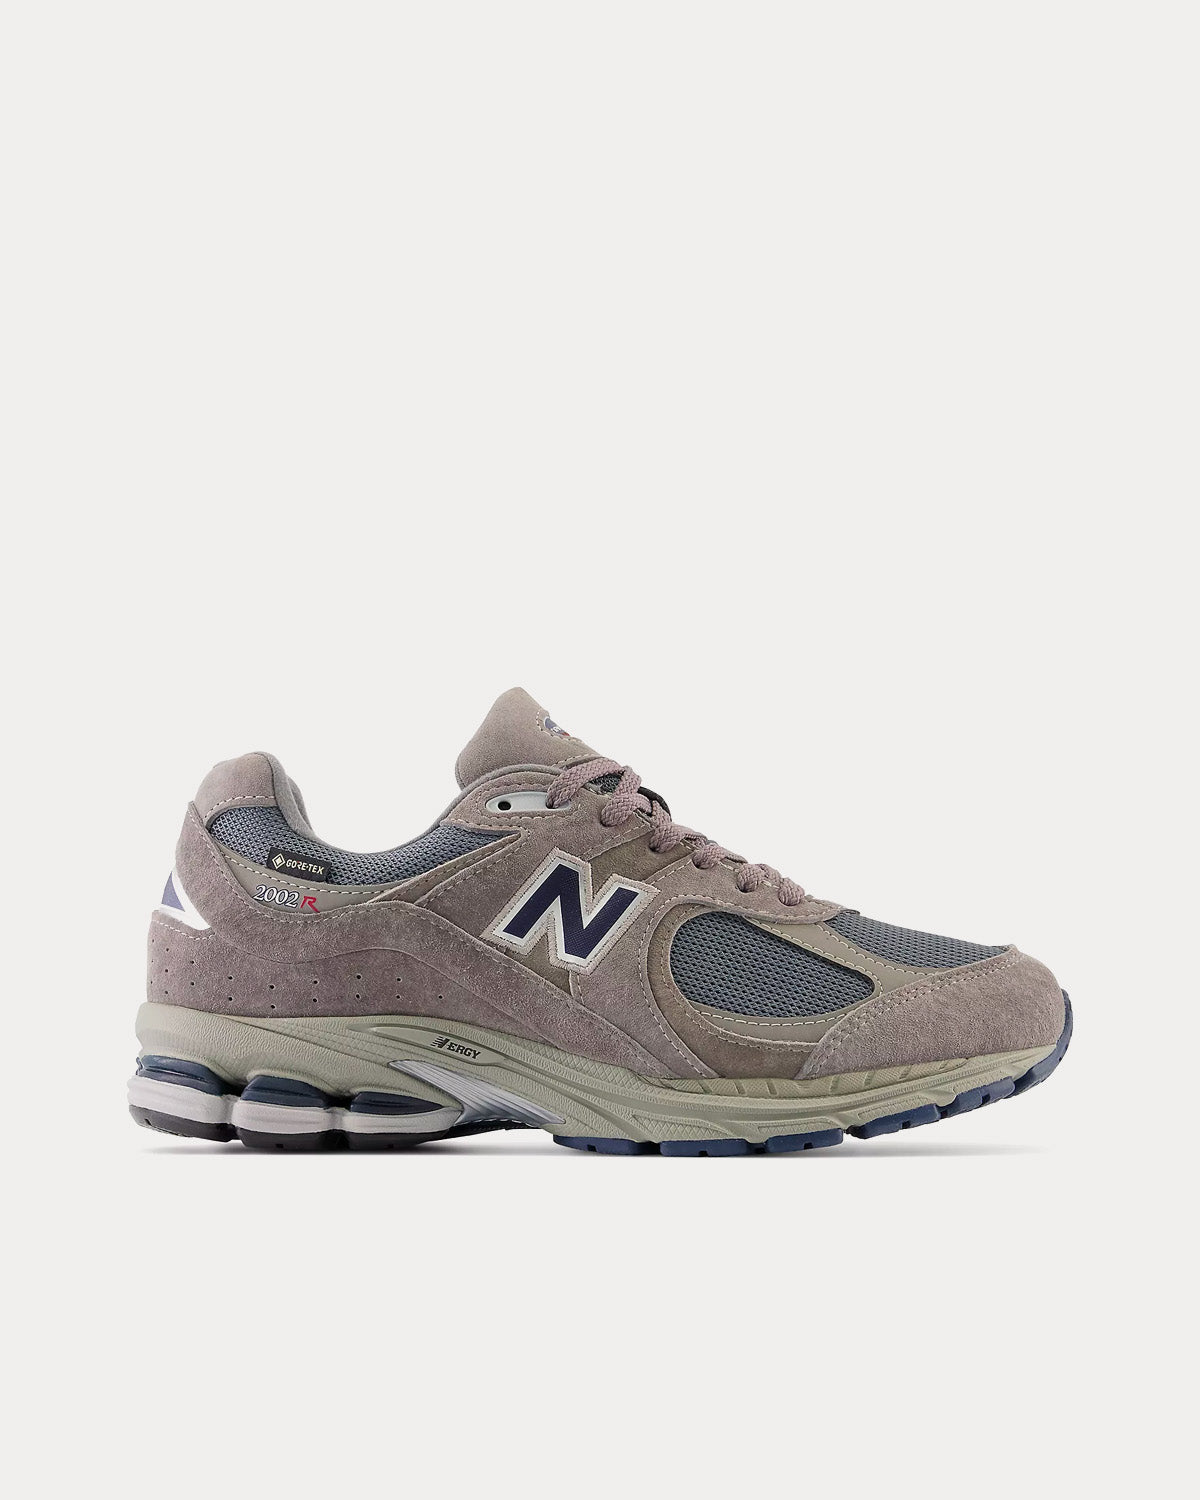 New Balance 2002RX Castlerock with Natural Indigo u0026 Brushed Nickel Low Top  Sneakers - Sneak in Peace